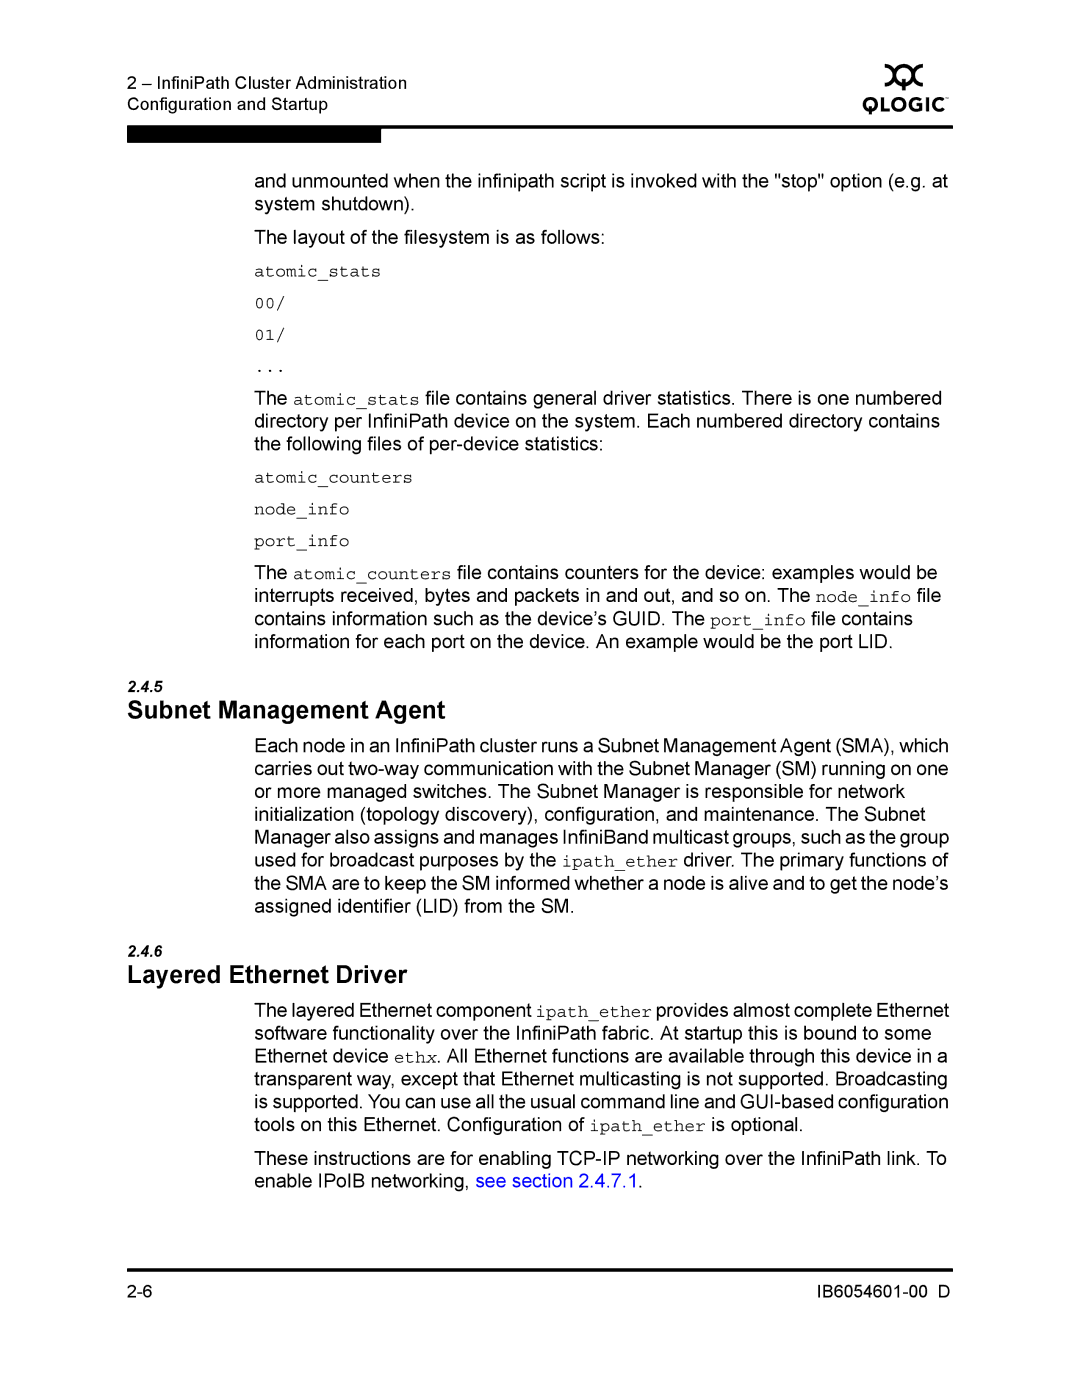 Q-Logic IB6054601-00 D manual Subnet Management Agent, Layered Ethernet Driver 